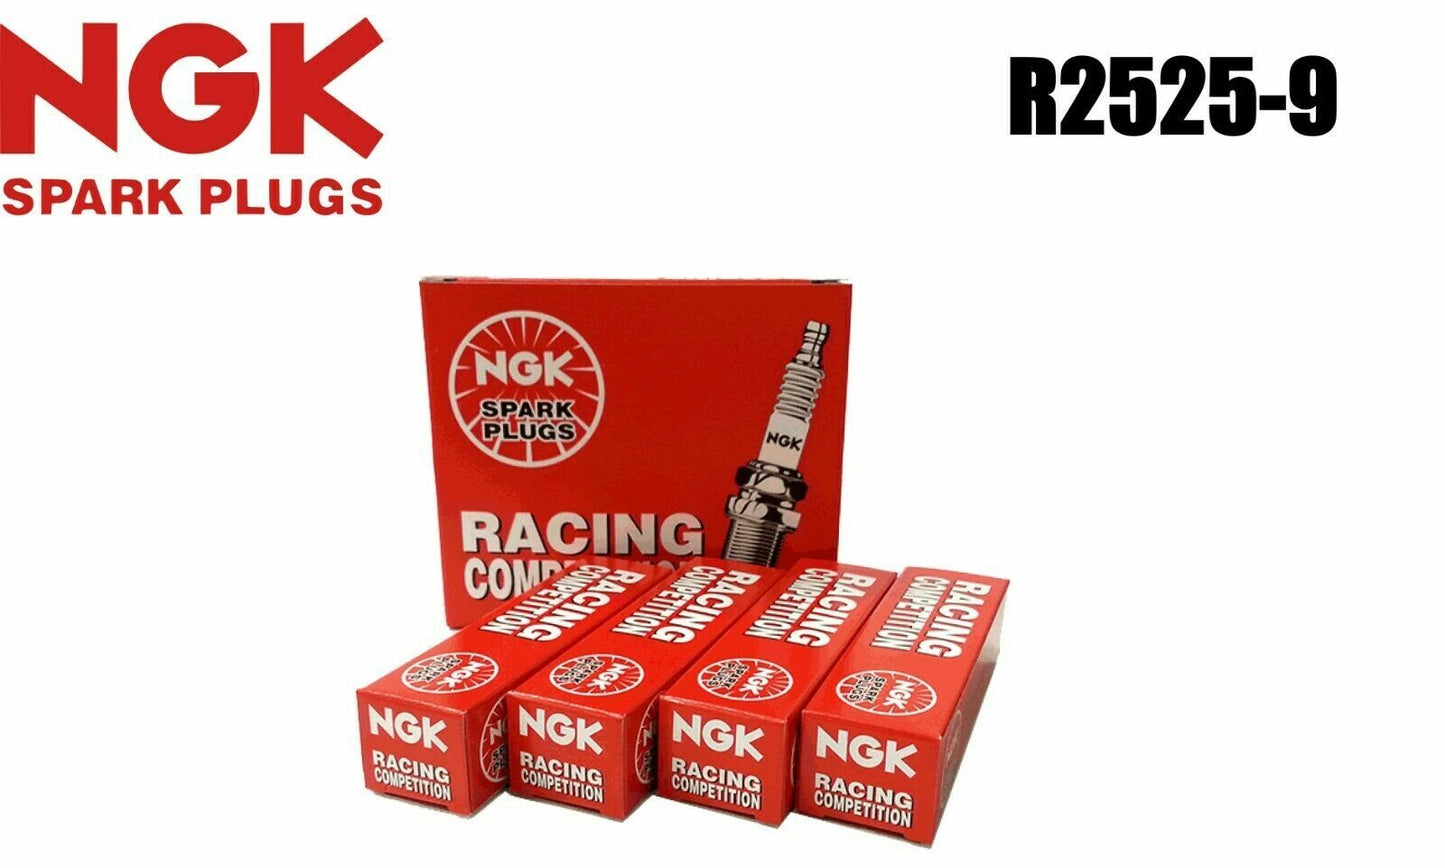 NGK Genuine SUZUKI SWIFT Racing Spark Plugs R2525-9 x 1 OEM JDM